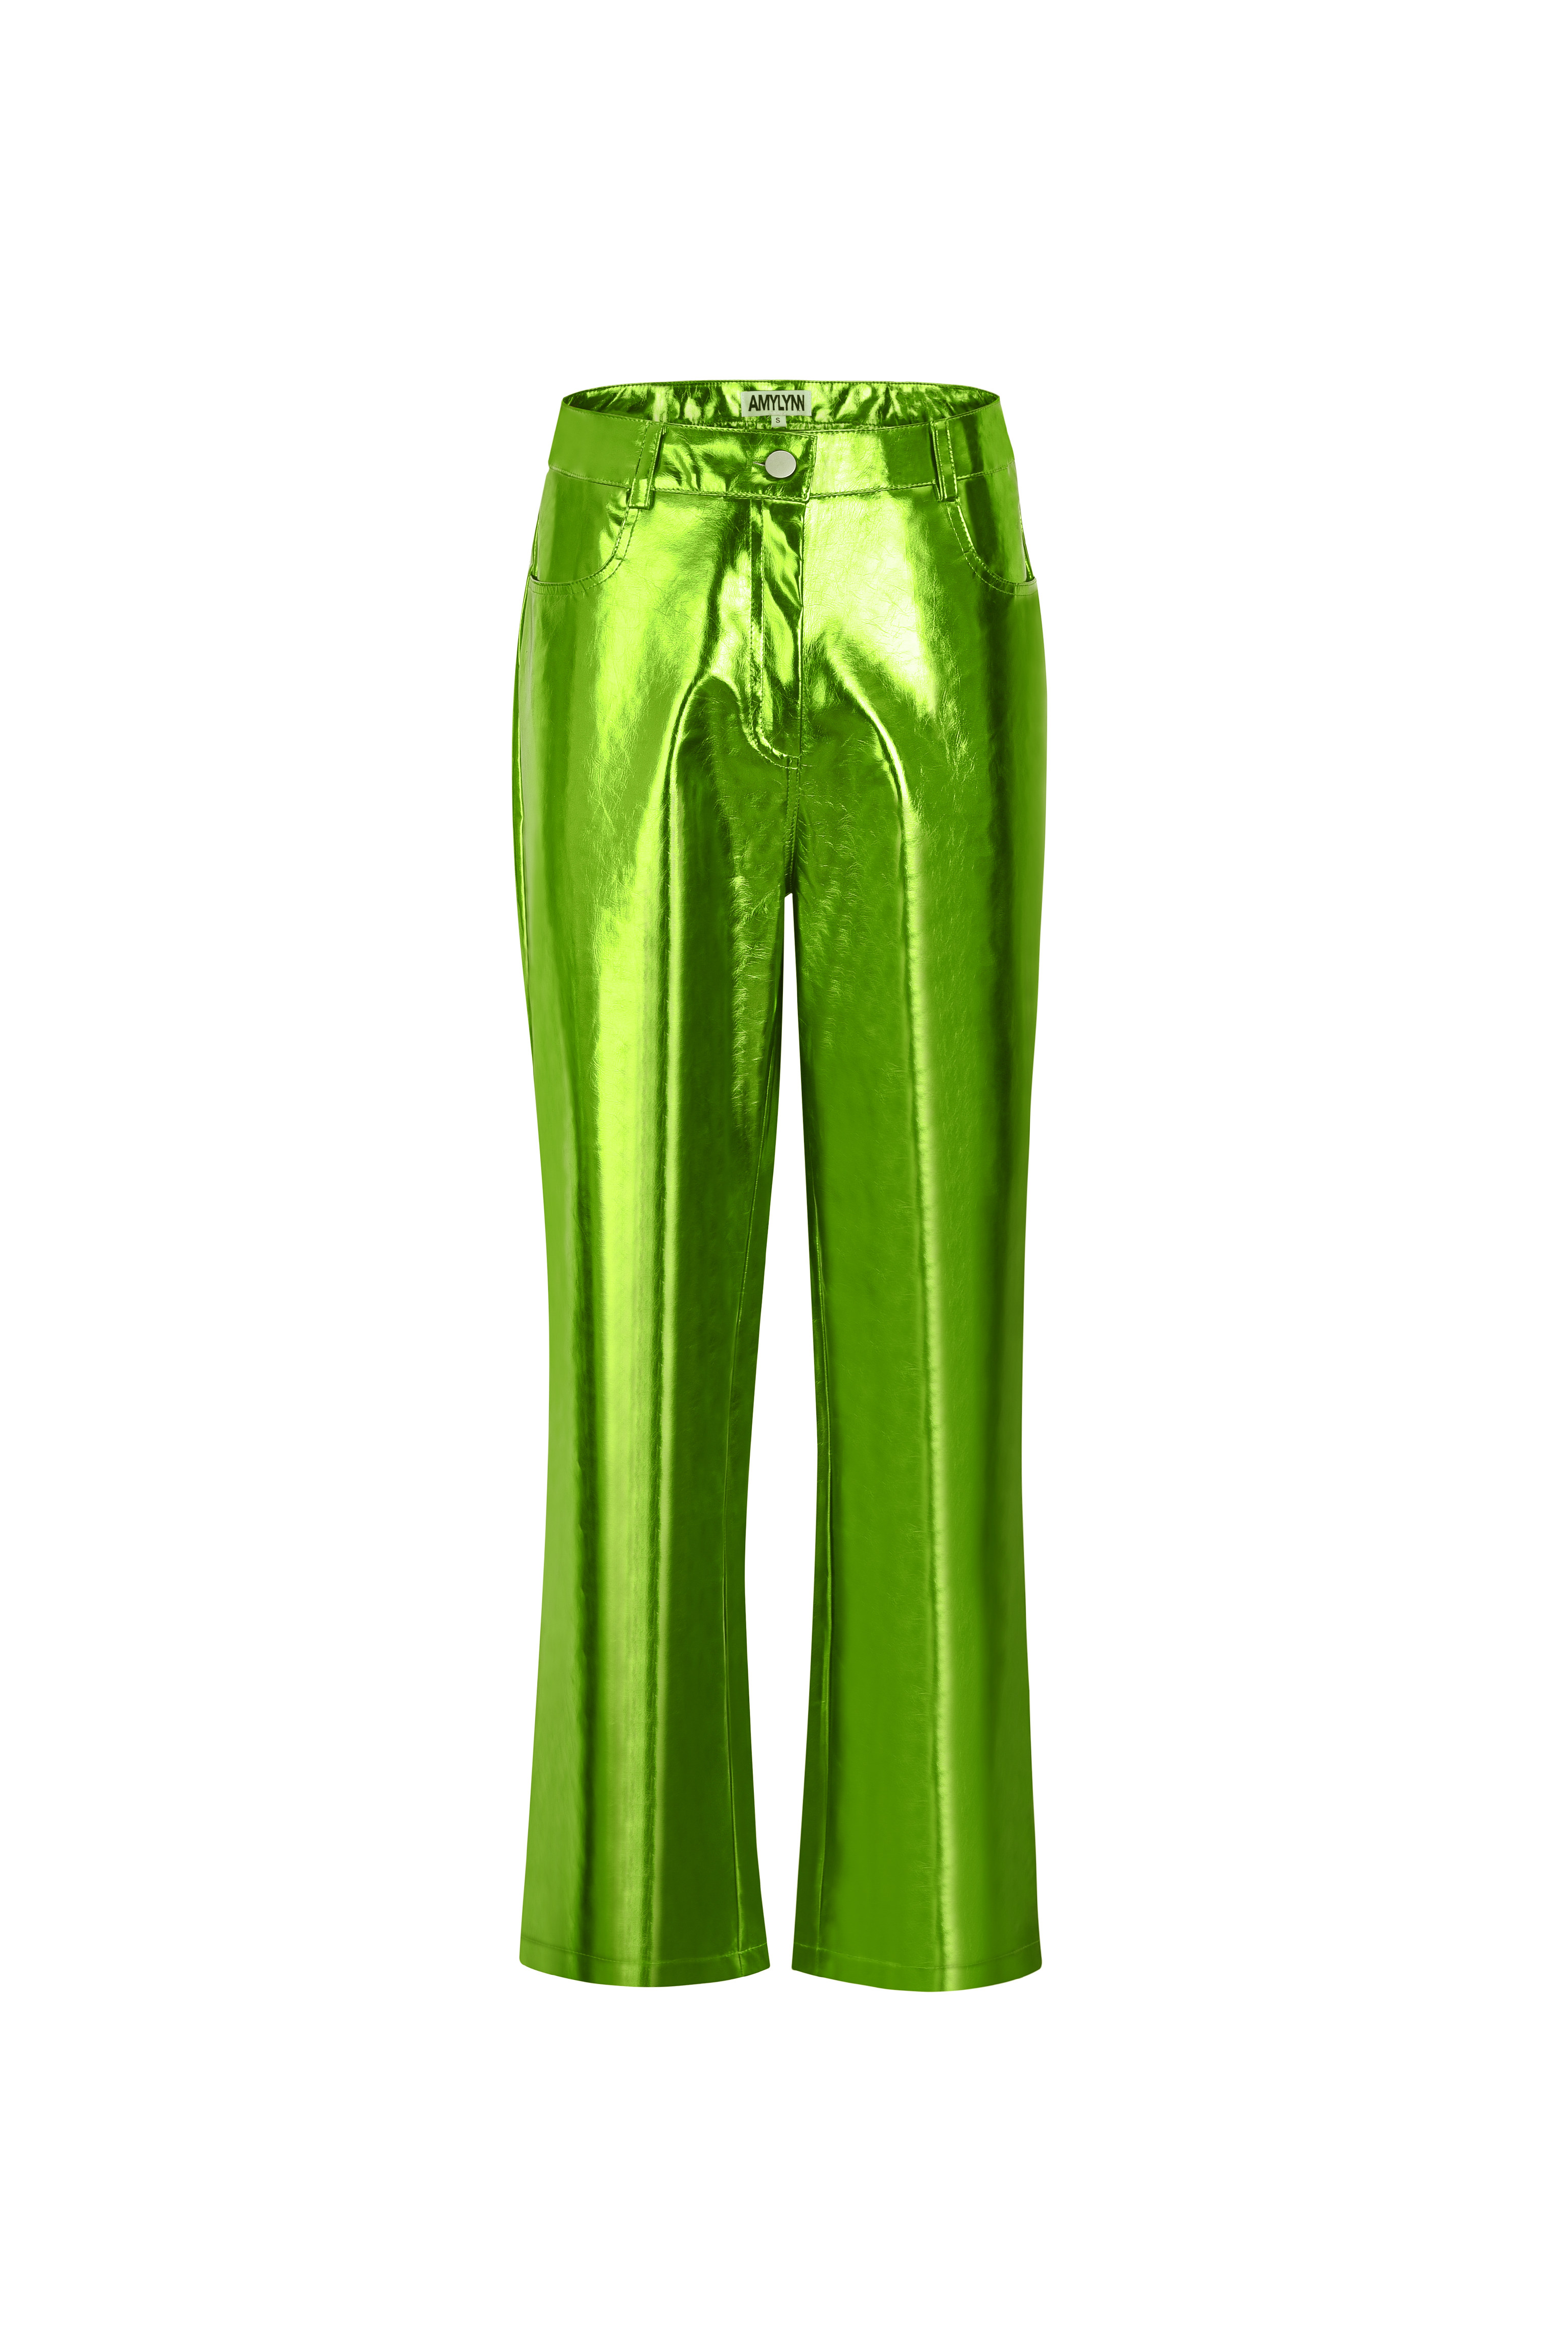 Amy Lynn Women's Lupe Green Metallic Vegan Leather Trousers